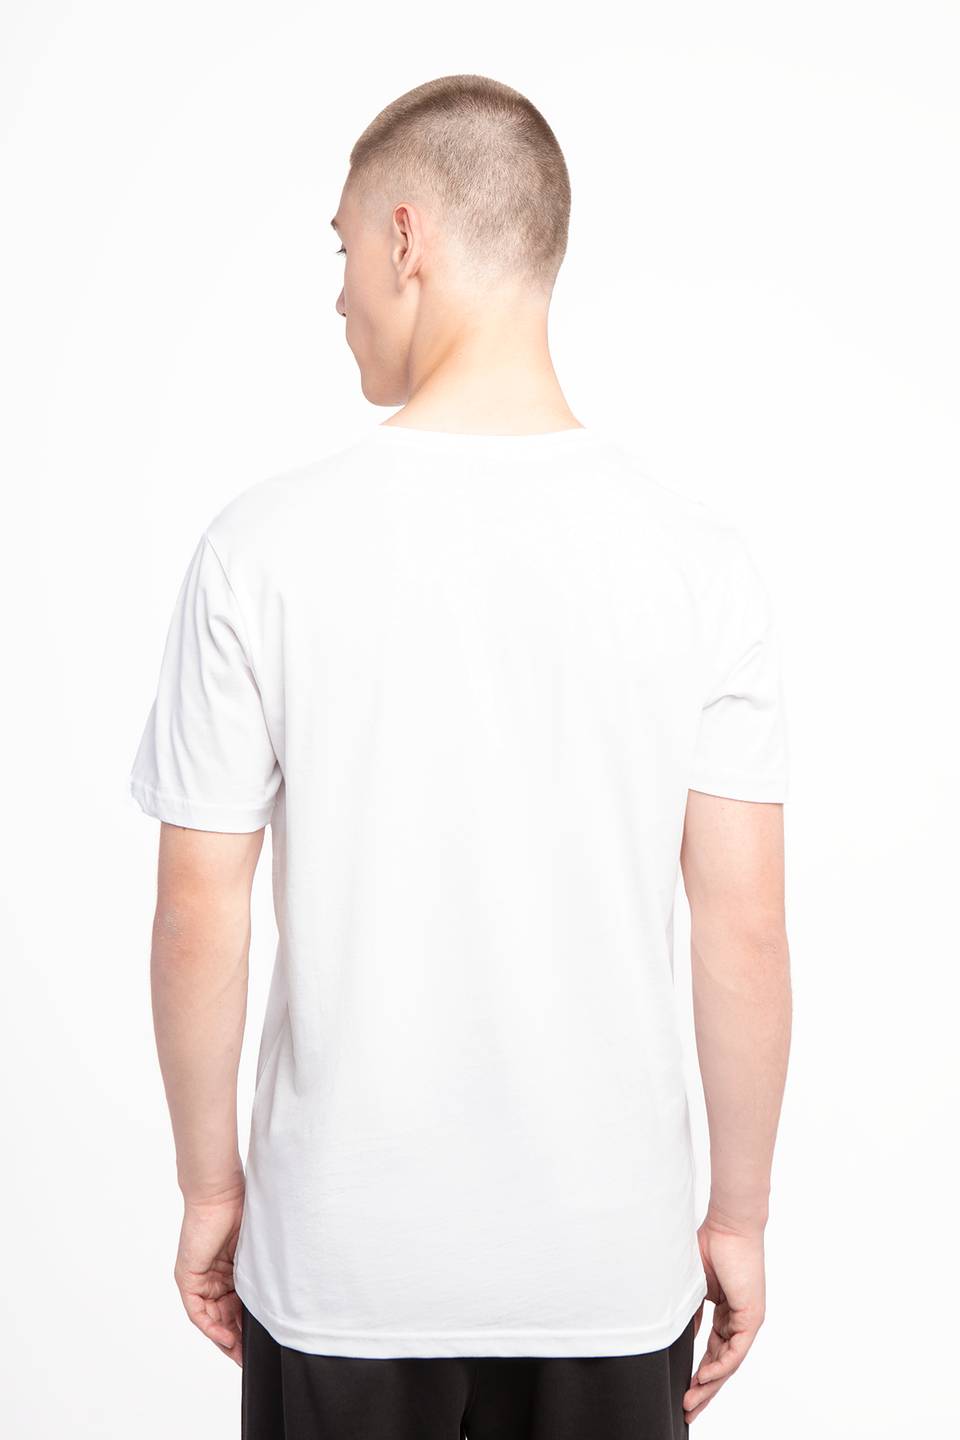 Koszulka Helly Hansen HH LOGO T-SHIRT 002 WHITE 33979_002